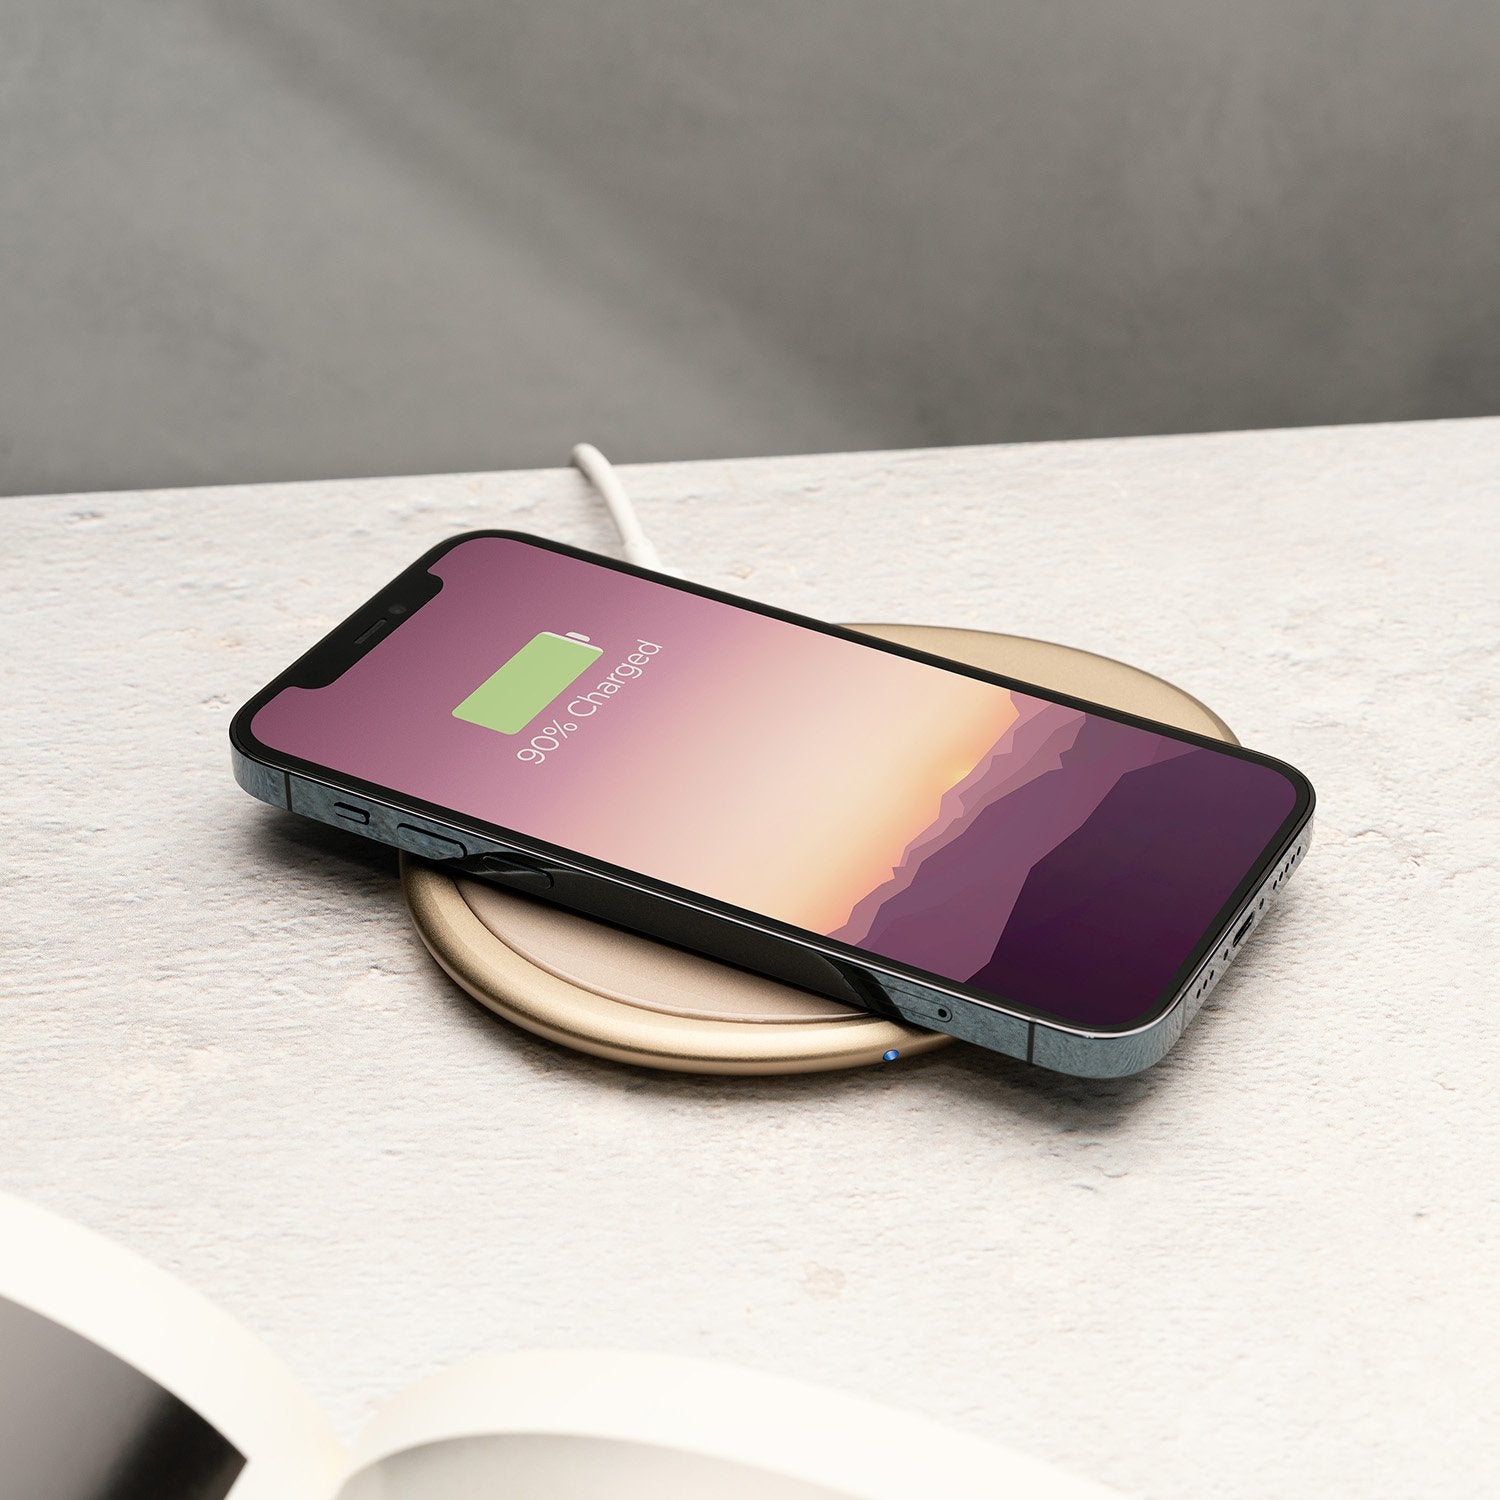 Phone on pink pebble charging pad